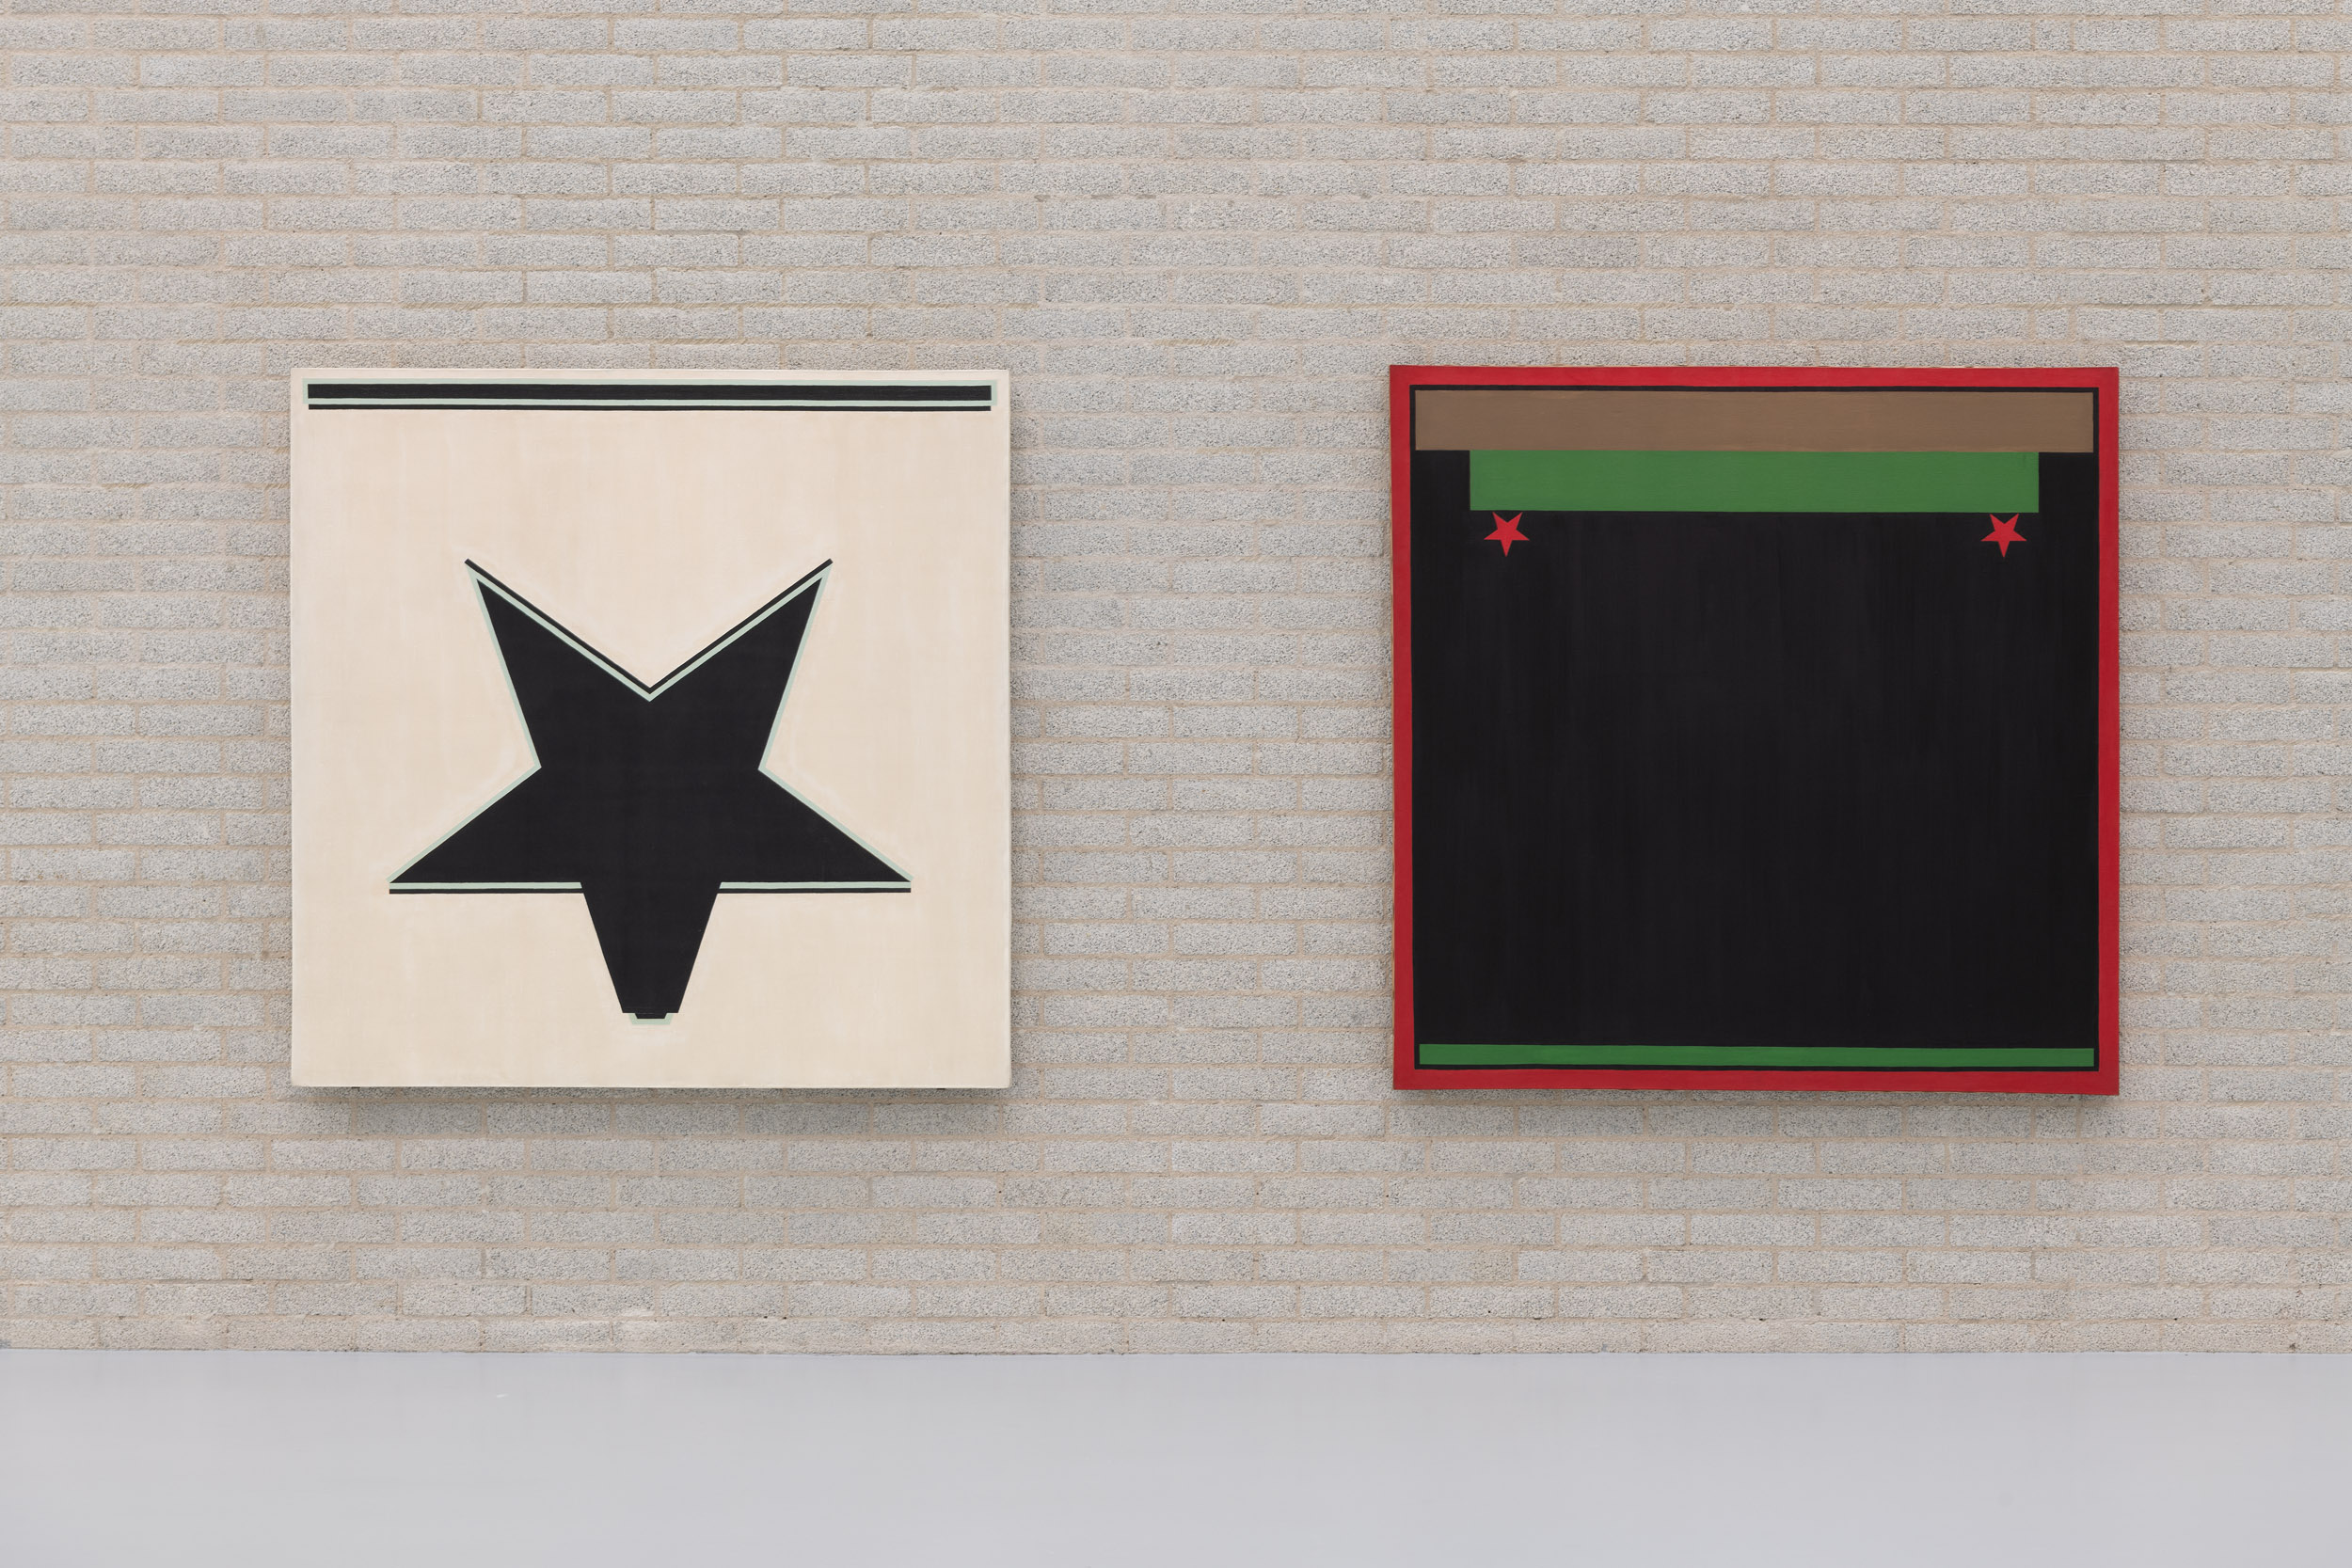 Galerie Barbara Thumm \ Jo Baer &#8211; Paint it Black, Kröller-Müller Museum, Otterlo, 2020